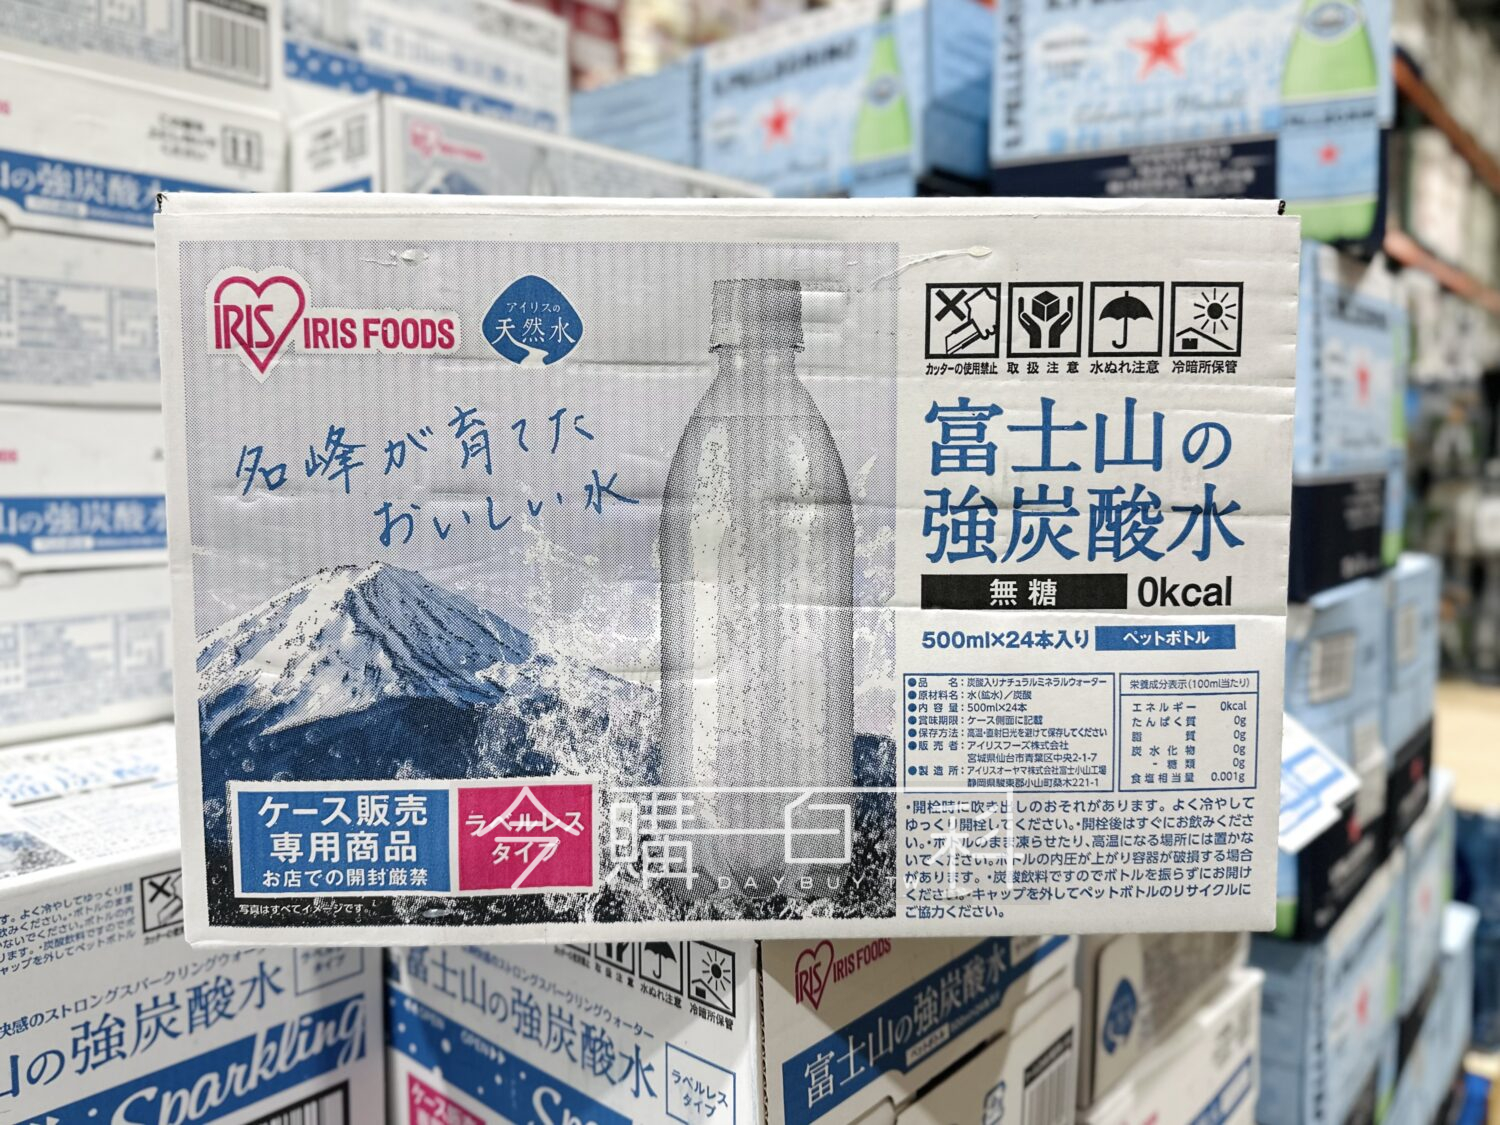 IRIS 富士山強氣泡水無標籤款 #151543